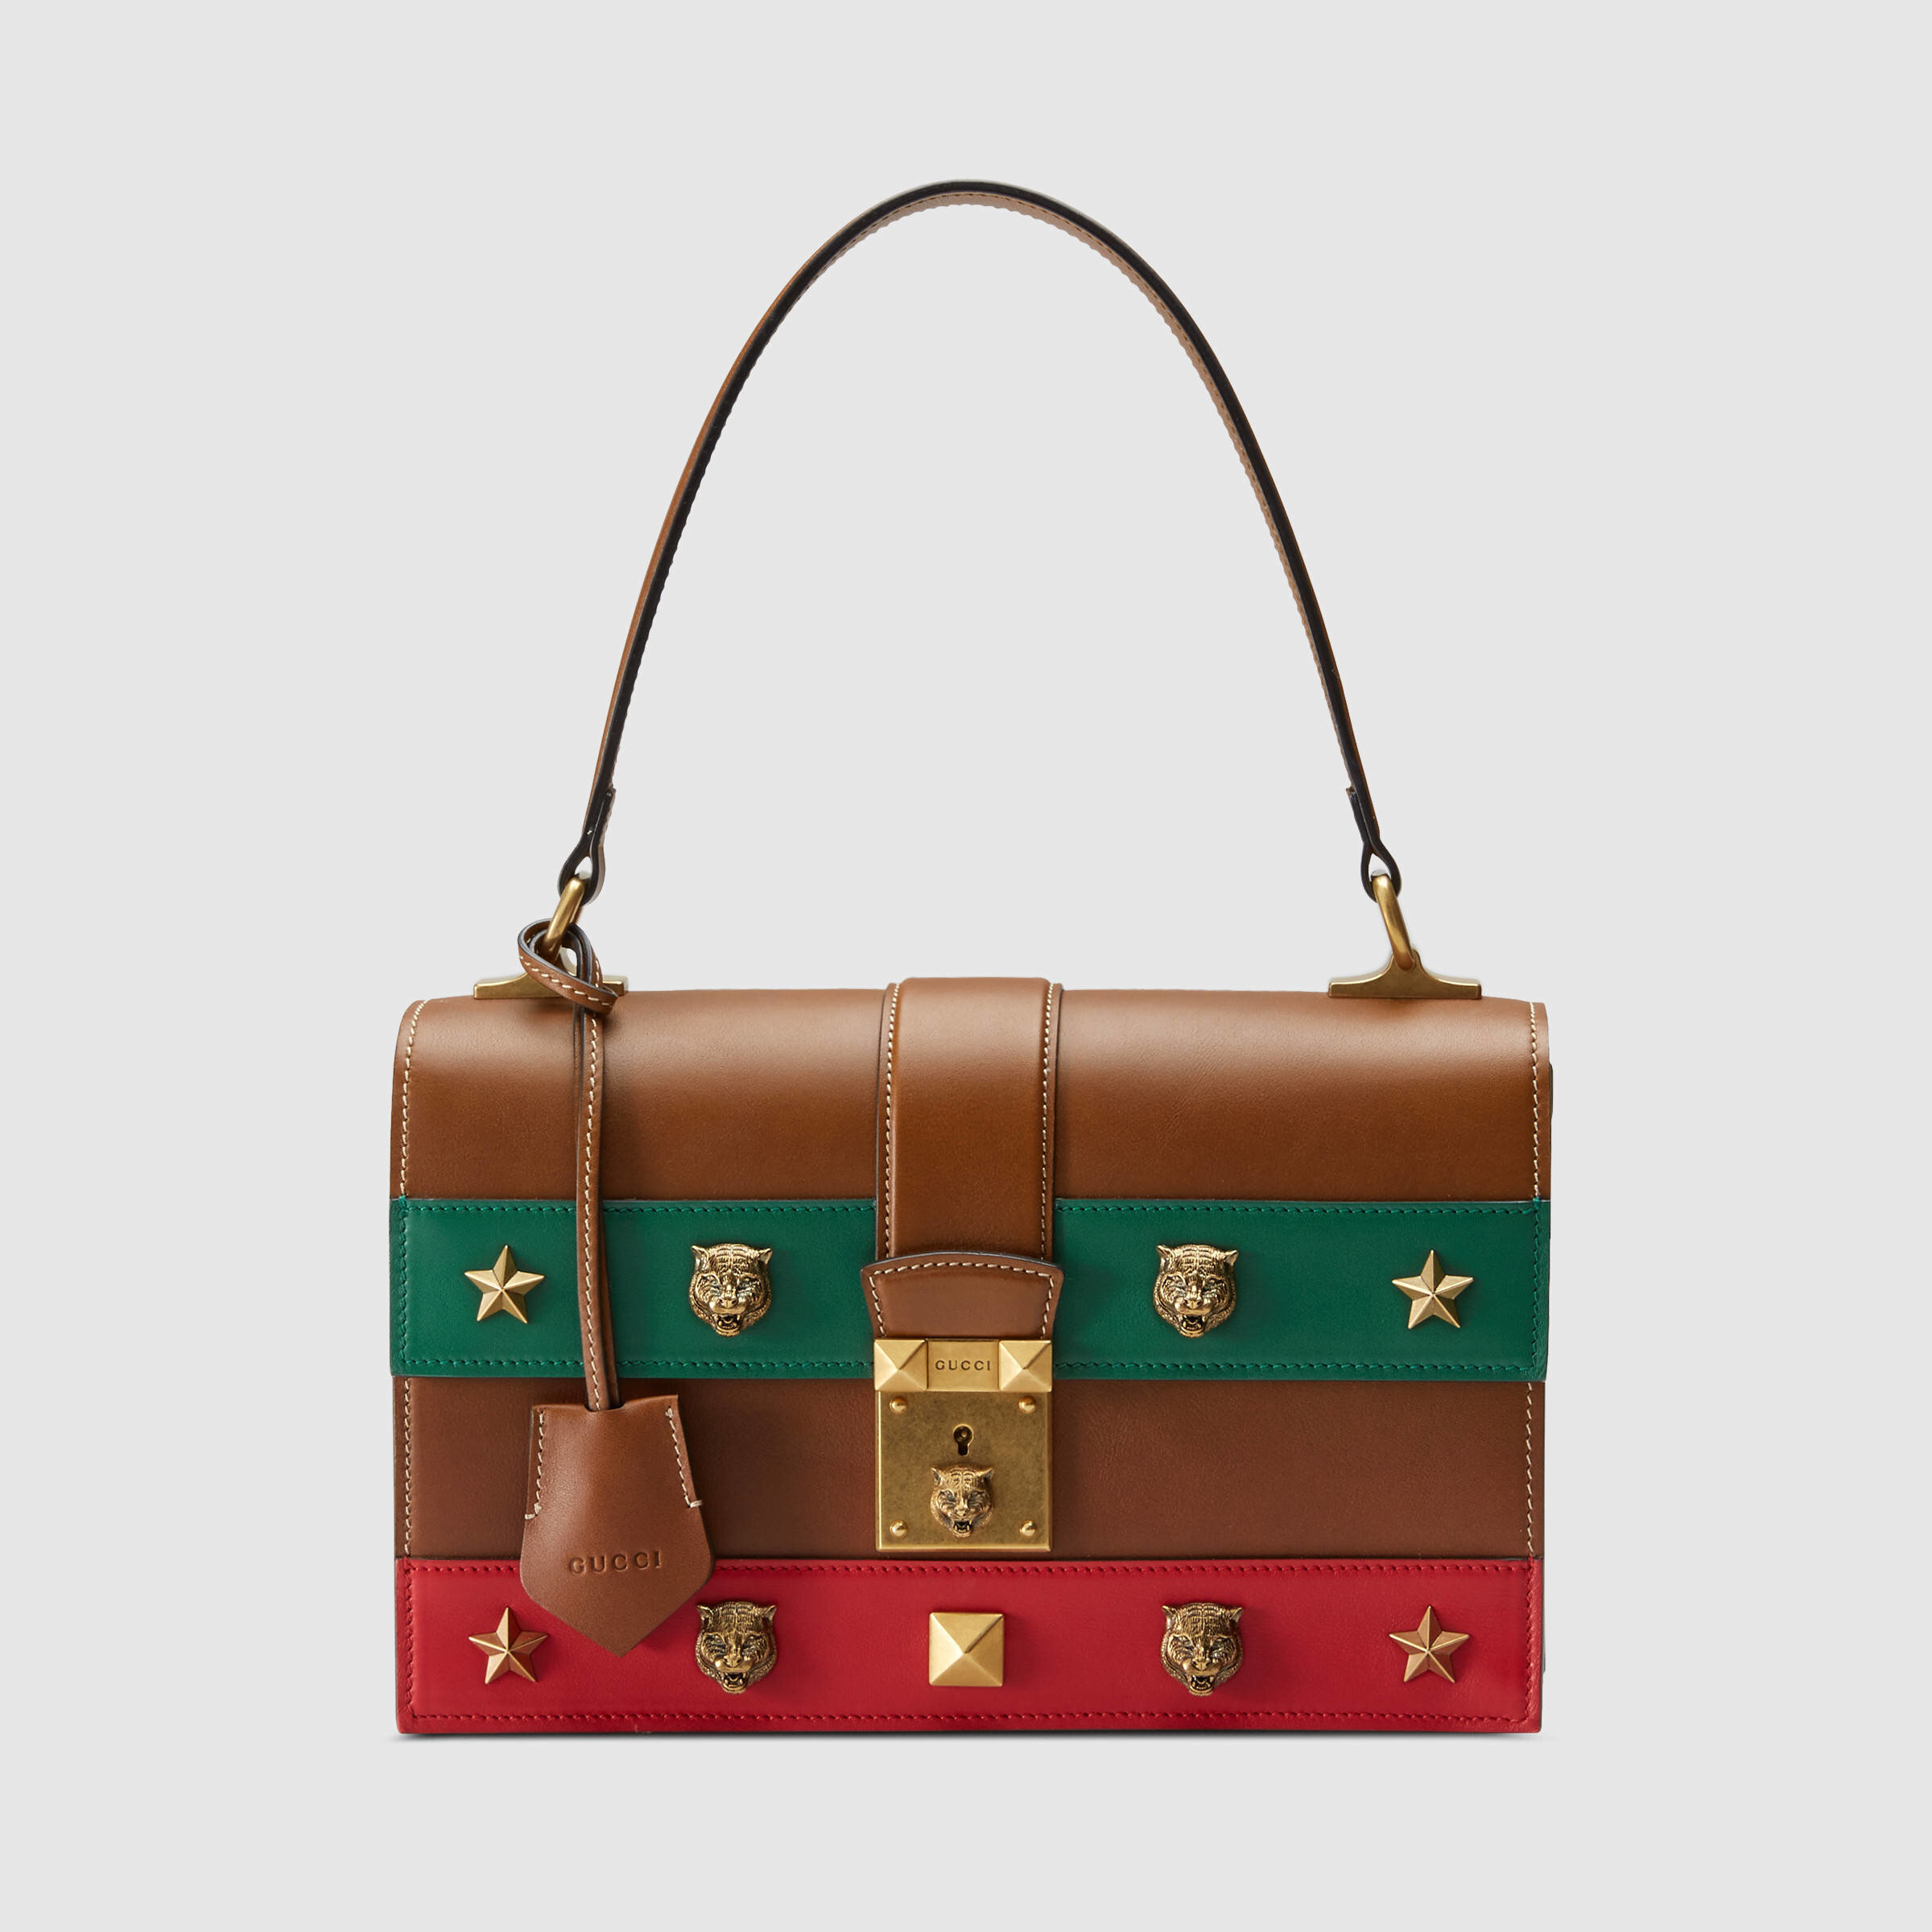 Gucci Cat Lock Leather Top Handle Bag in Brown.jpg